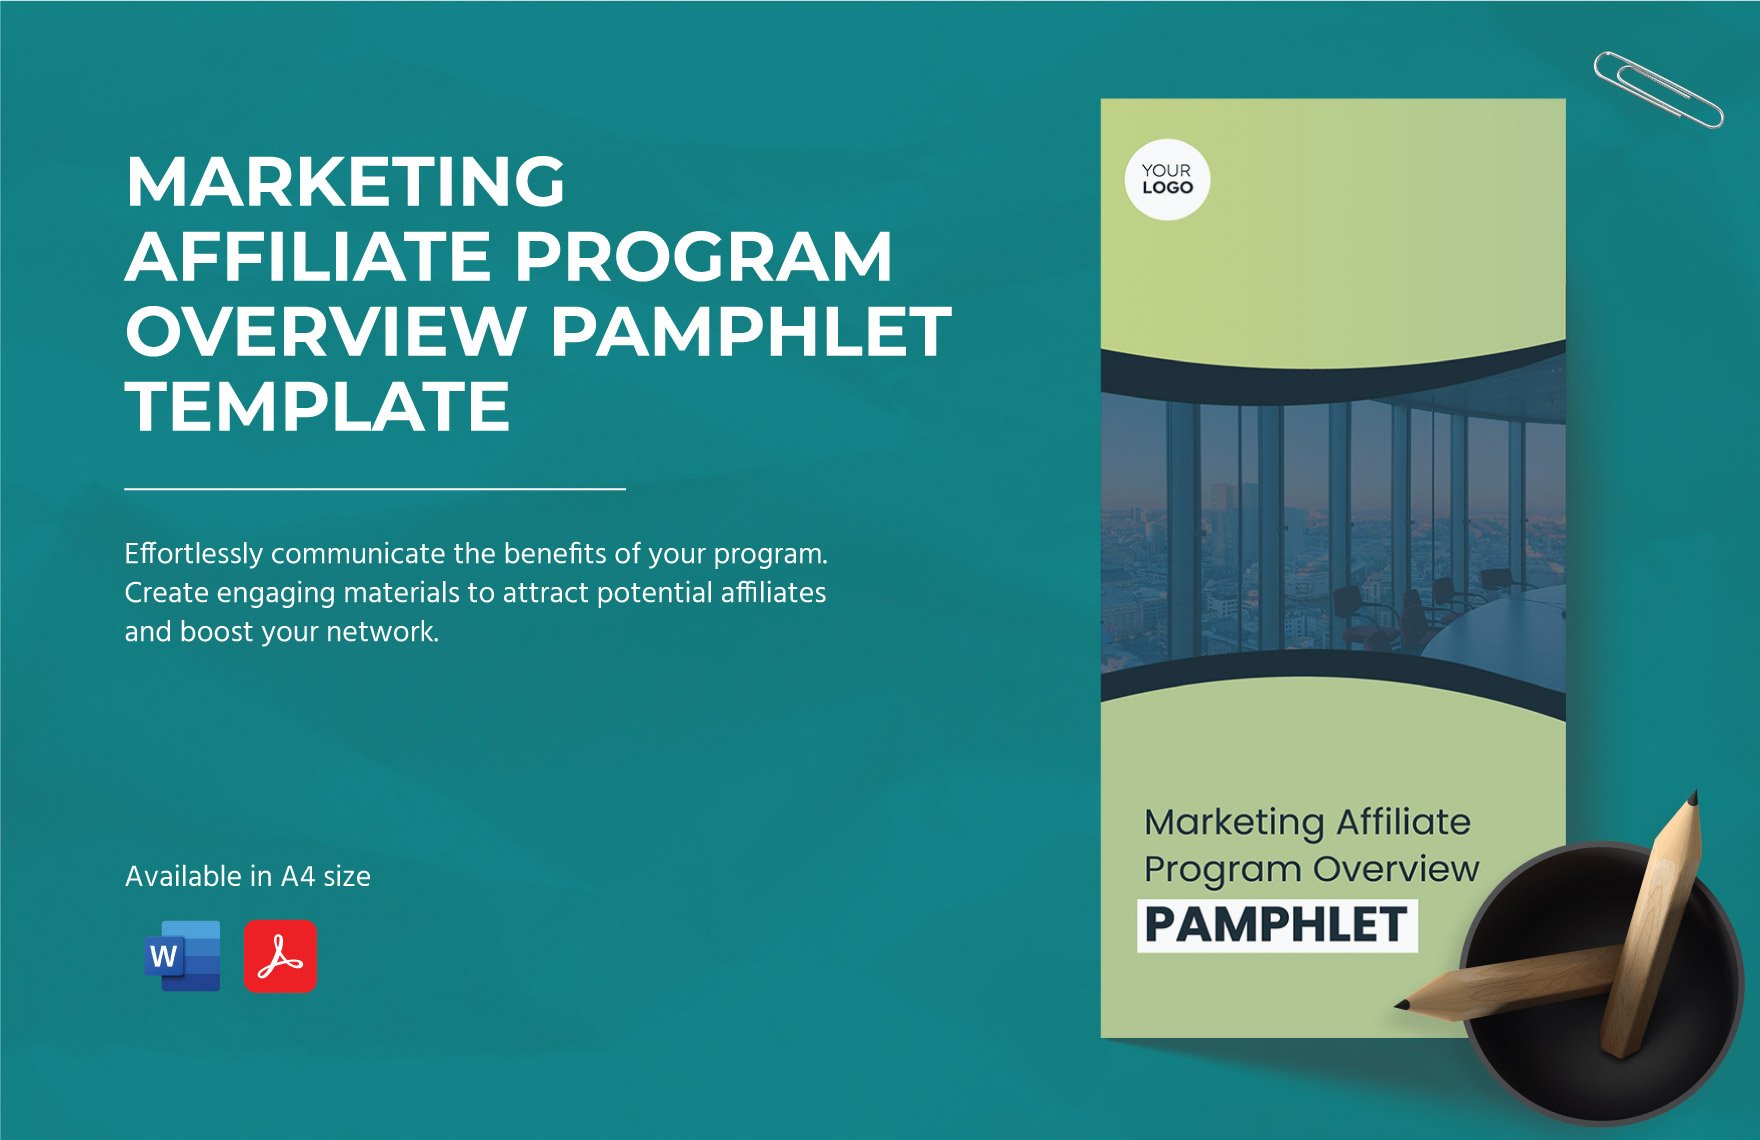 Marketing Affiliate Program Overview Pamphlet Template